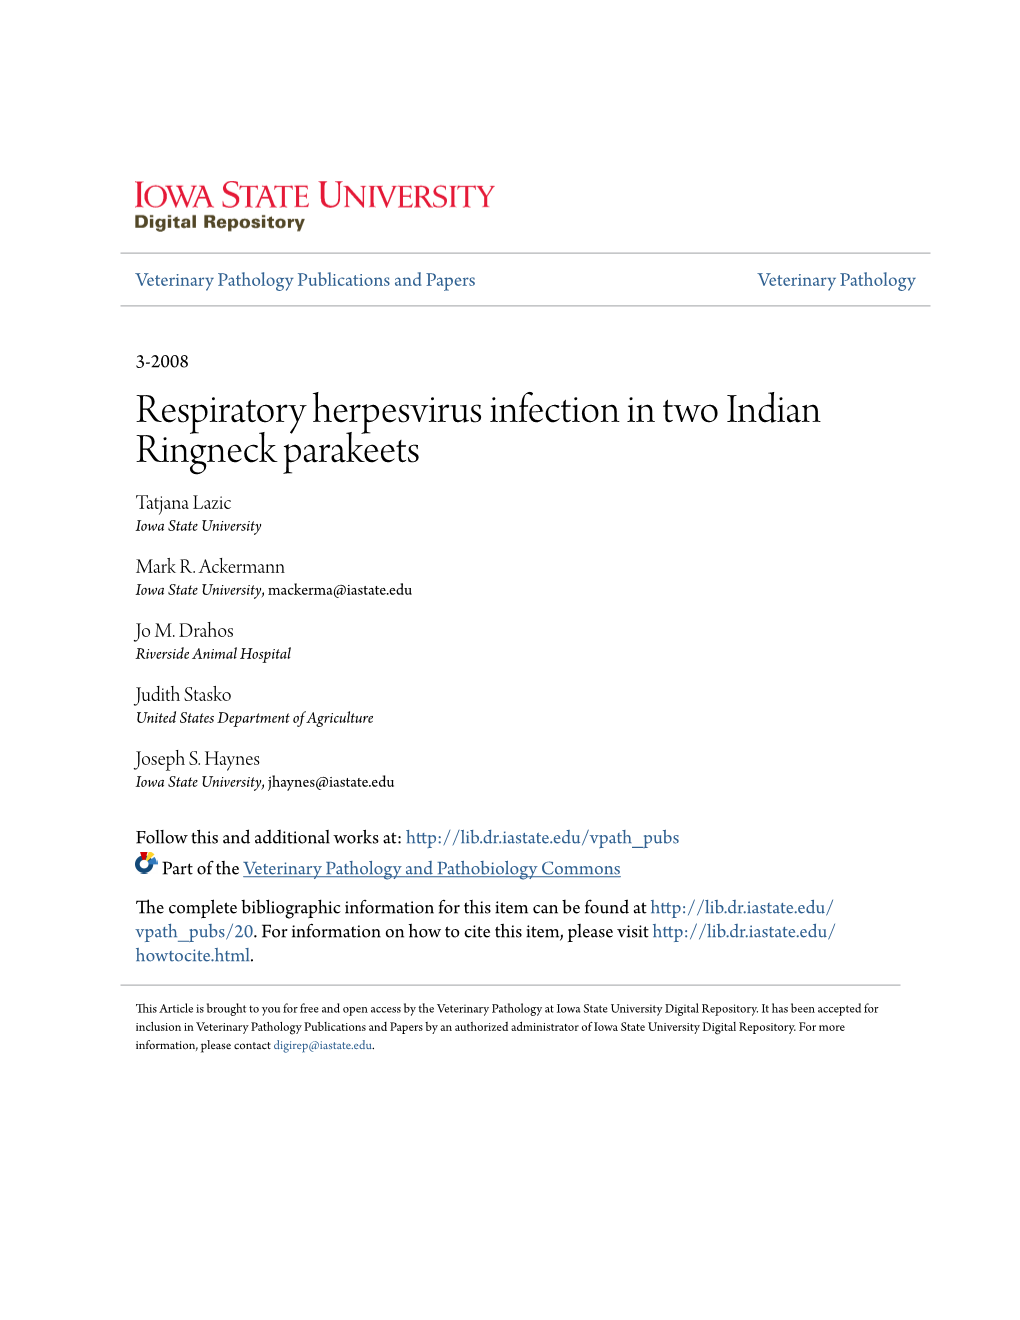 Respiratory Herpesvirus Infection in Two Indian Ringneck Parakeets Tatjana Lazic Iowa State University